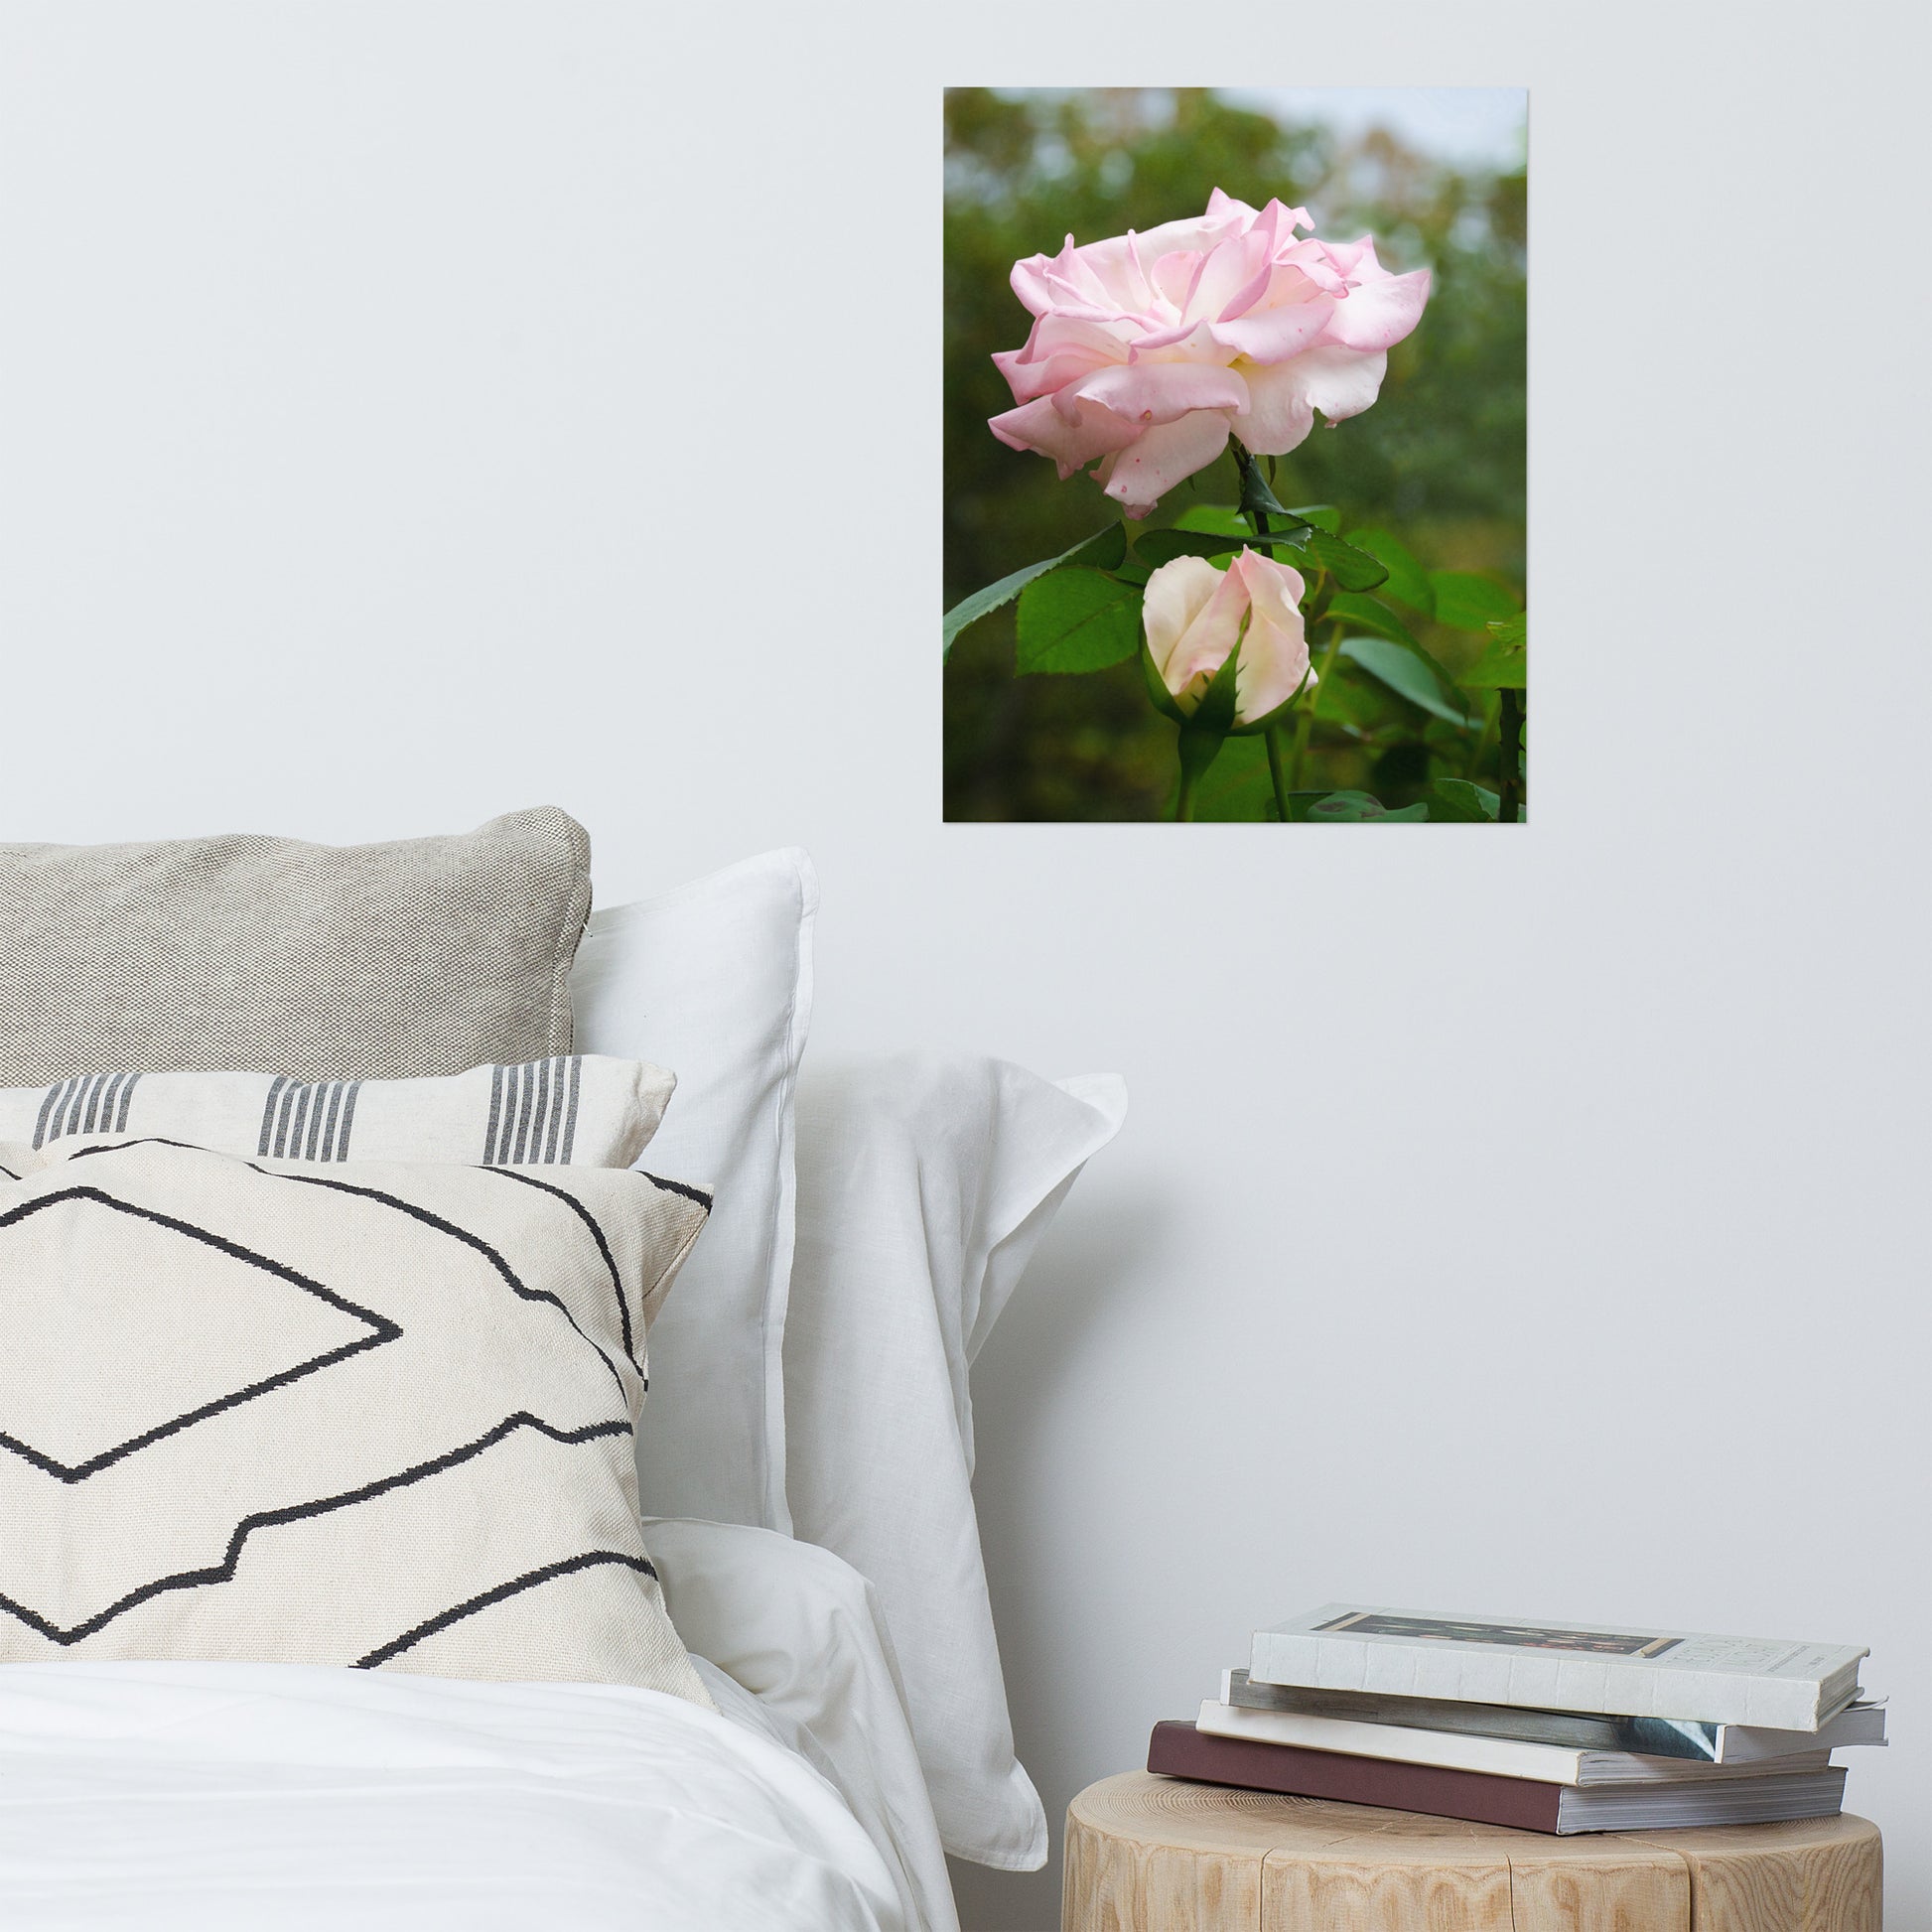 Aesthetic Flower Poster: Admiration Rose - Botanical / Floral / Flora / Flowers / Nature Photograph Loose / Unframed / Frameless / Frameable Wall Art Print - Artwork